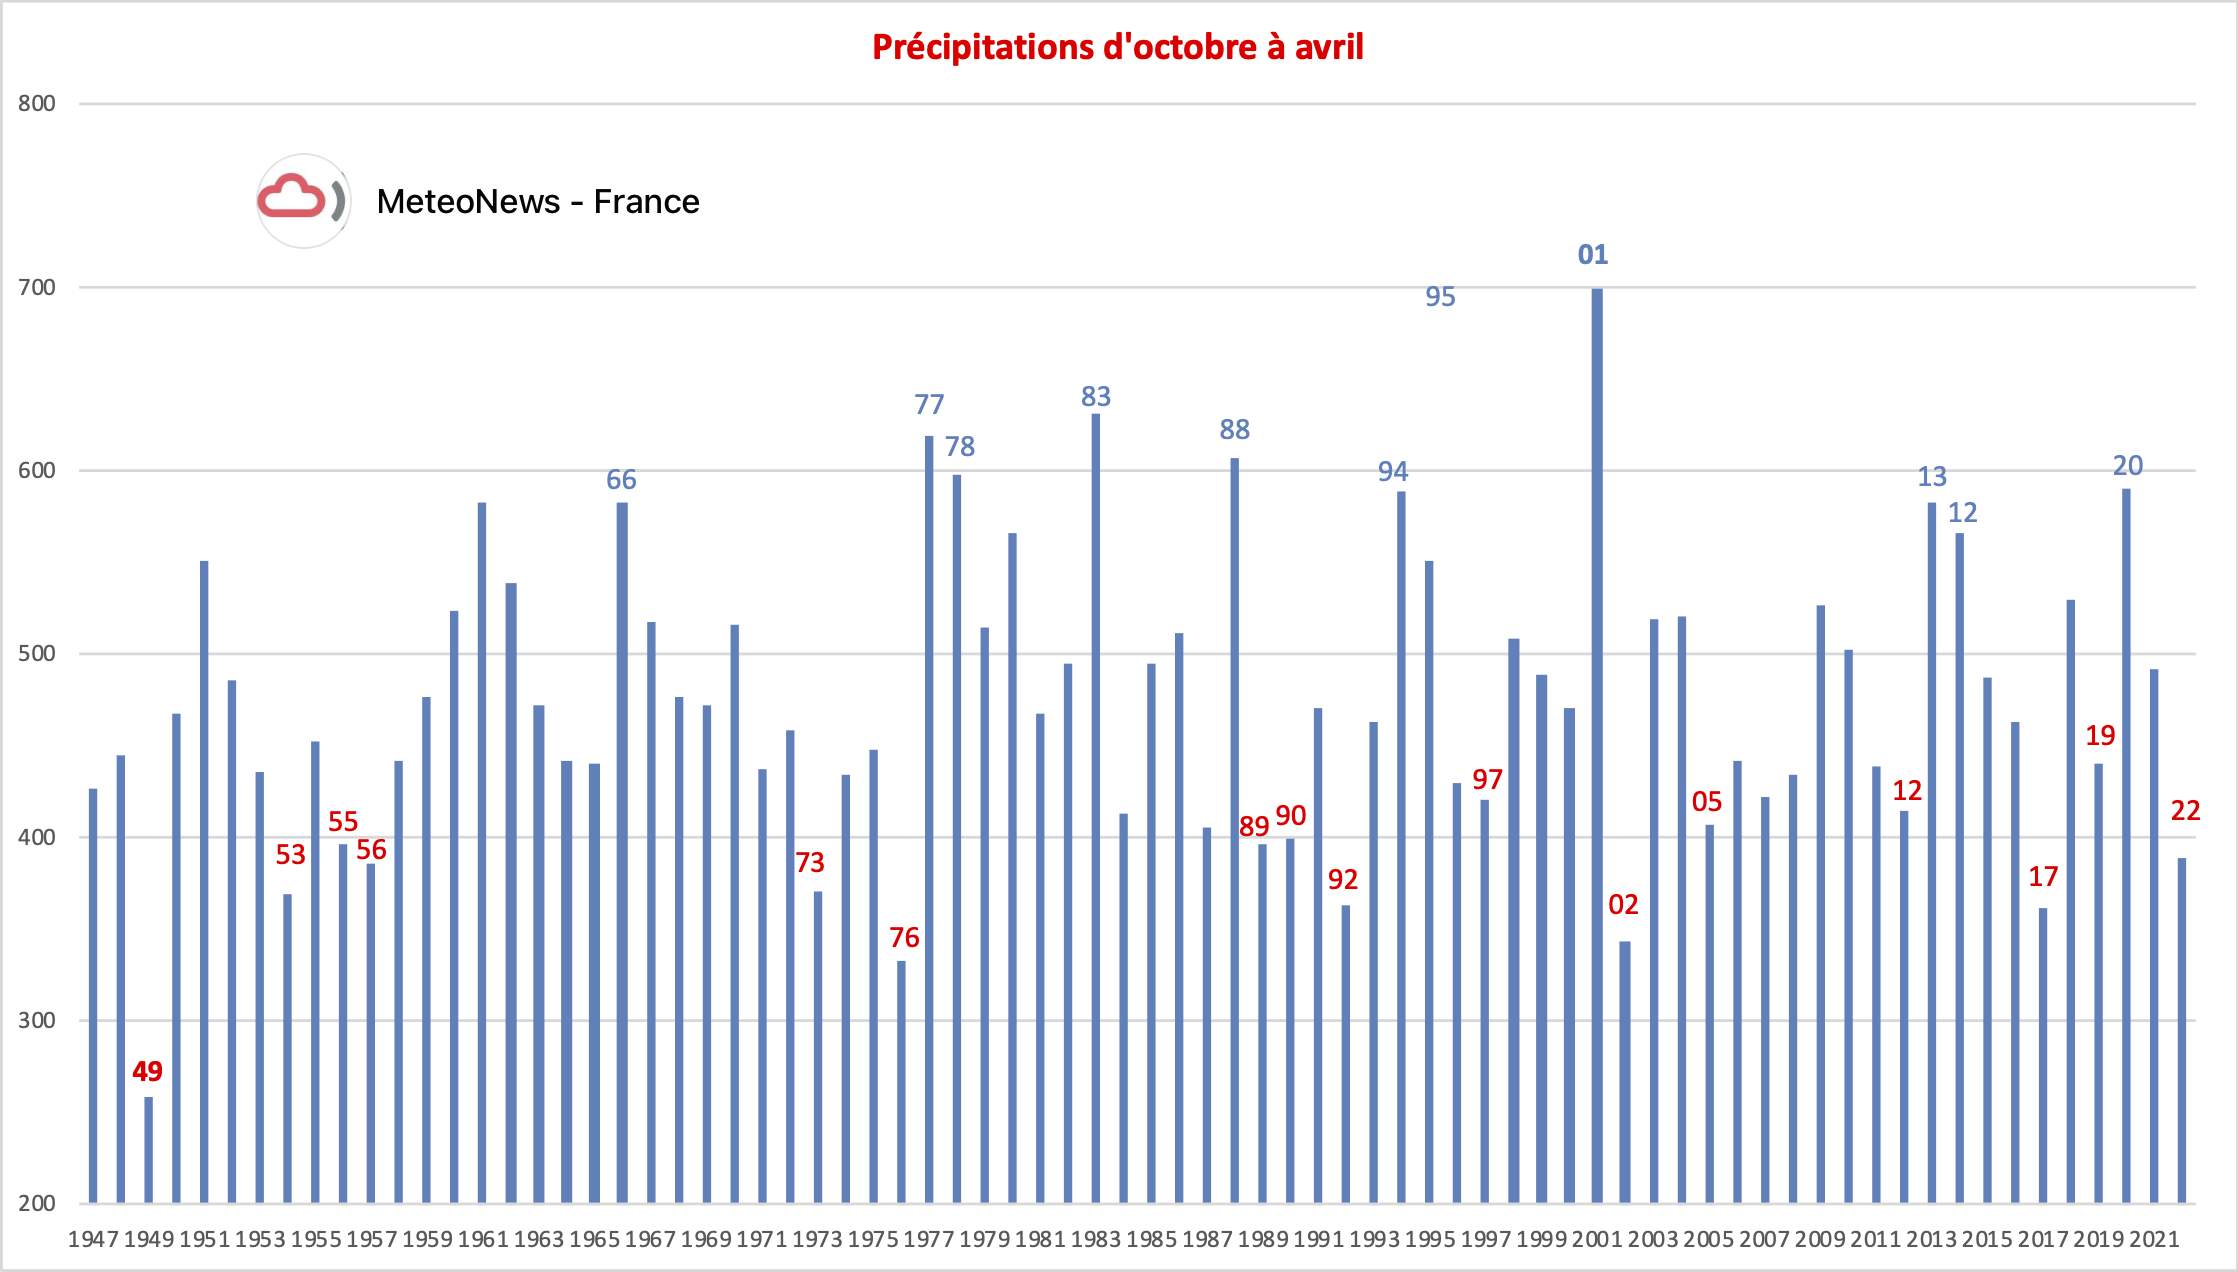 Fig. 2: Précipitations d'octobre à avril en France